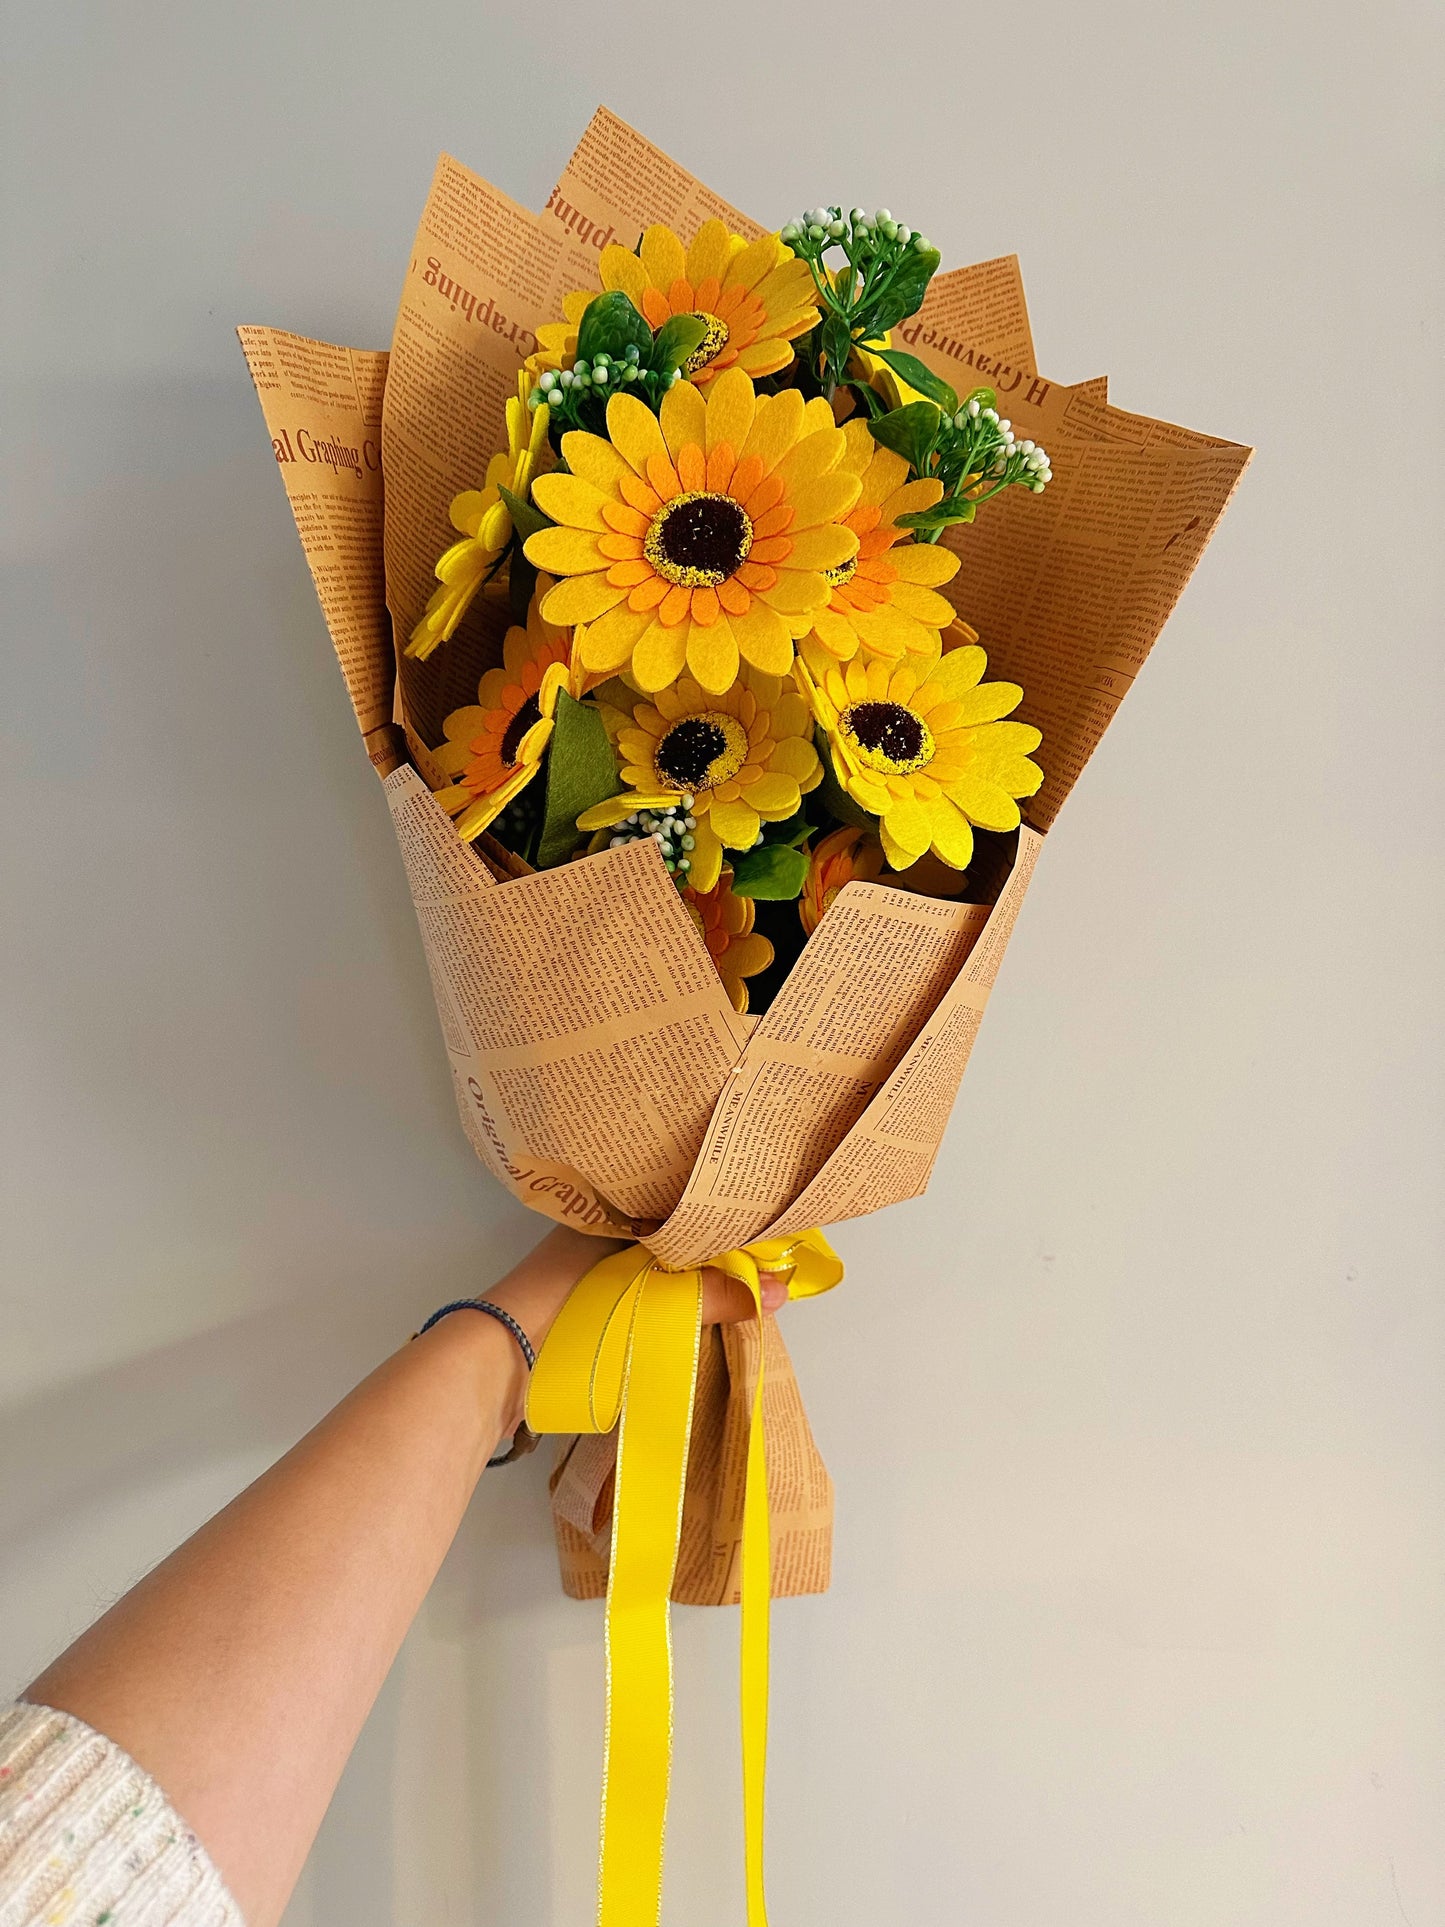 DIY felt flowers bouquet - Big Felt Sunflowers bouquet, Felt flowers DIY kit, No Cutting, Sunflowers, birthday gift